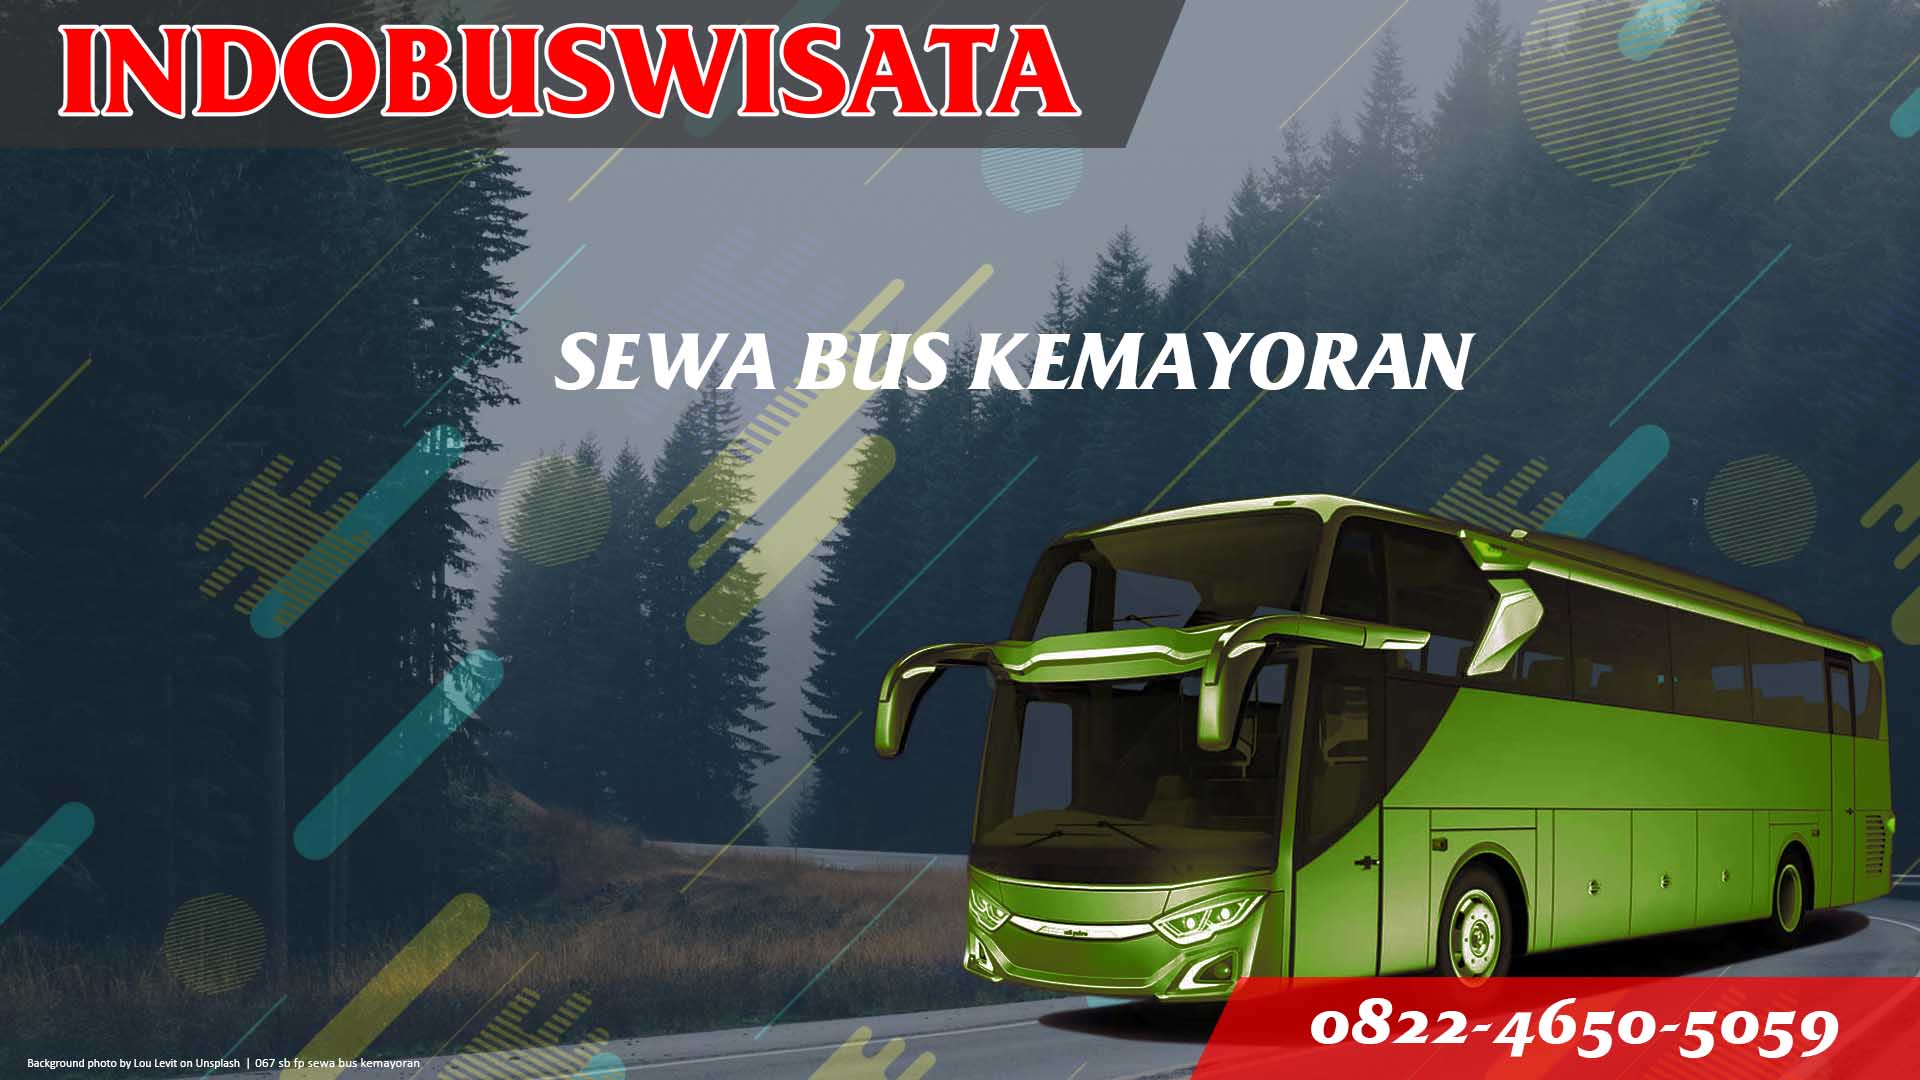 067 Sb Fp Sewa Bus Kemayoran Jb 3 Hdd Indobuswisata